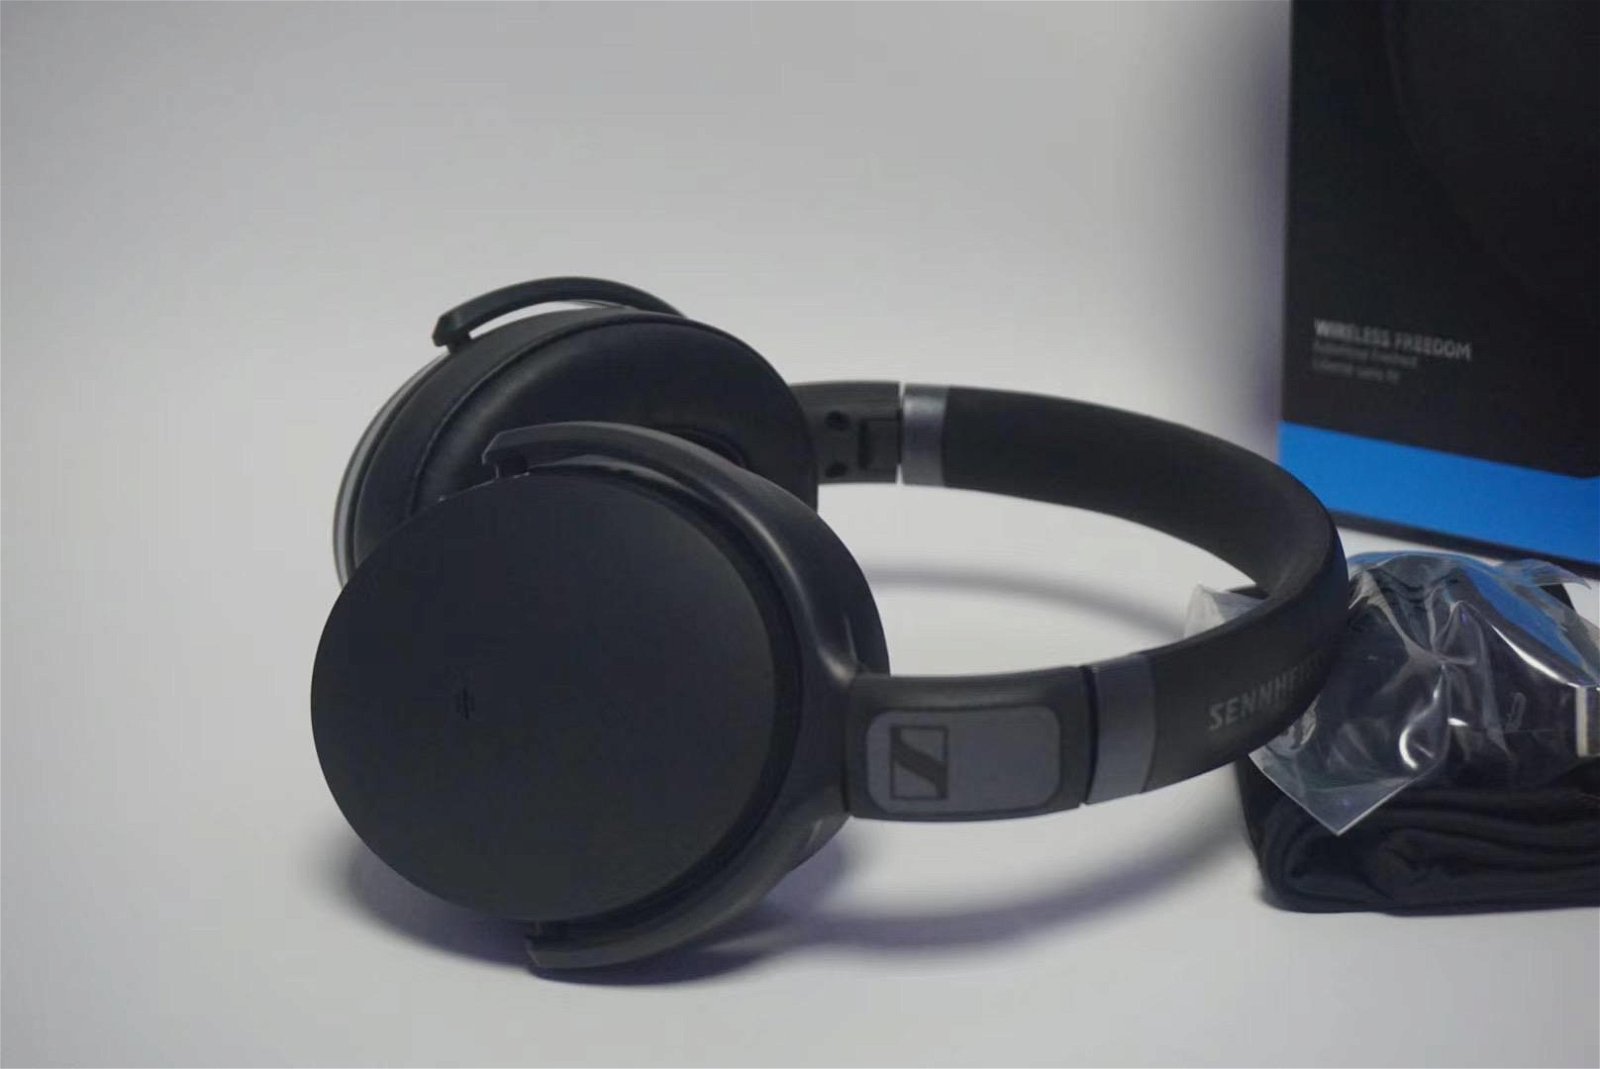 2023 Senn heiser HD 4.40BT headsets headphones earphones 5